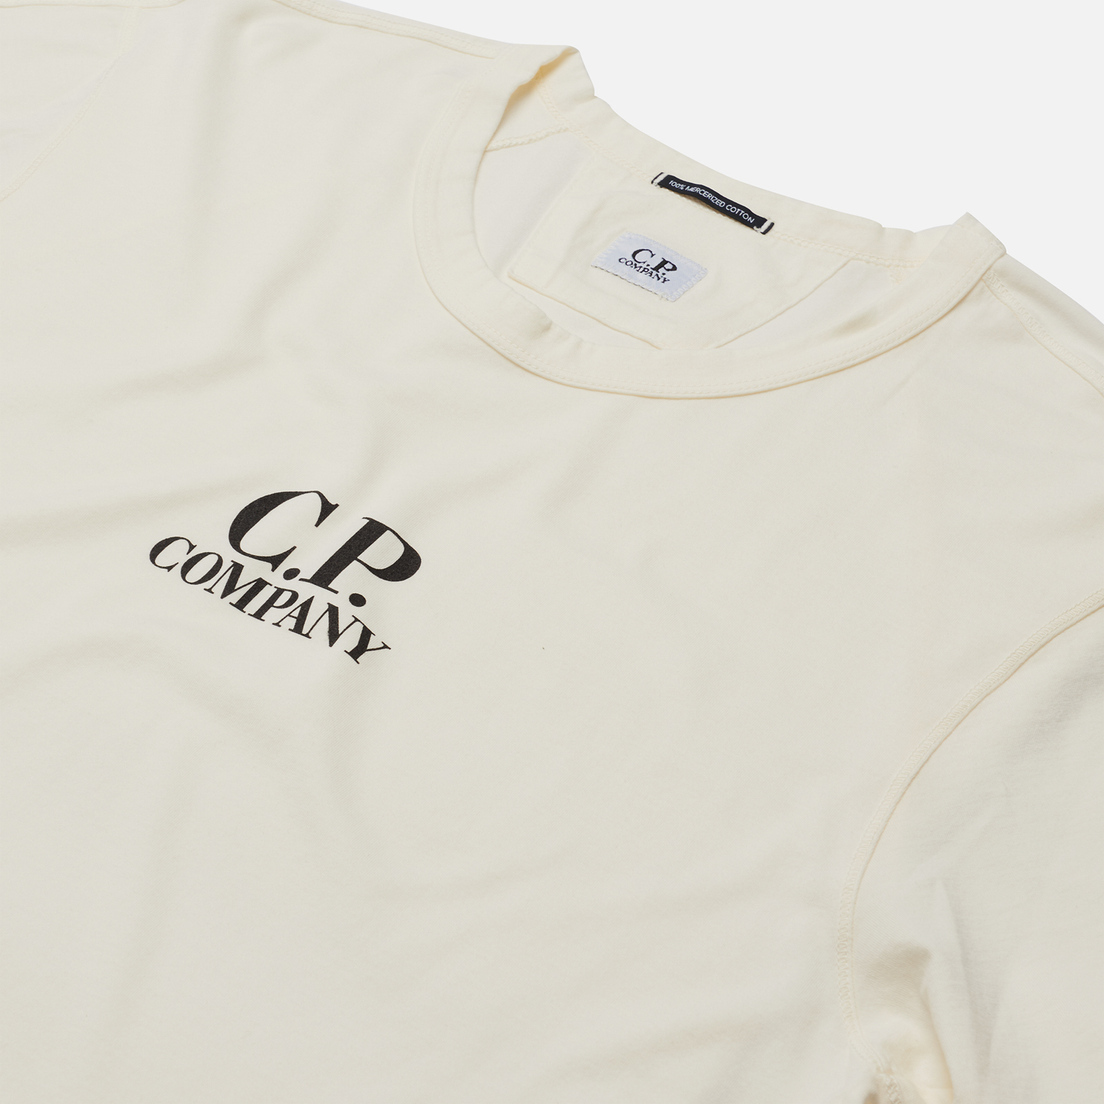 C.P. Company Мужская футболка Mercerized Jersey